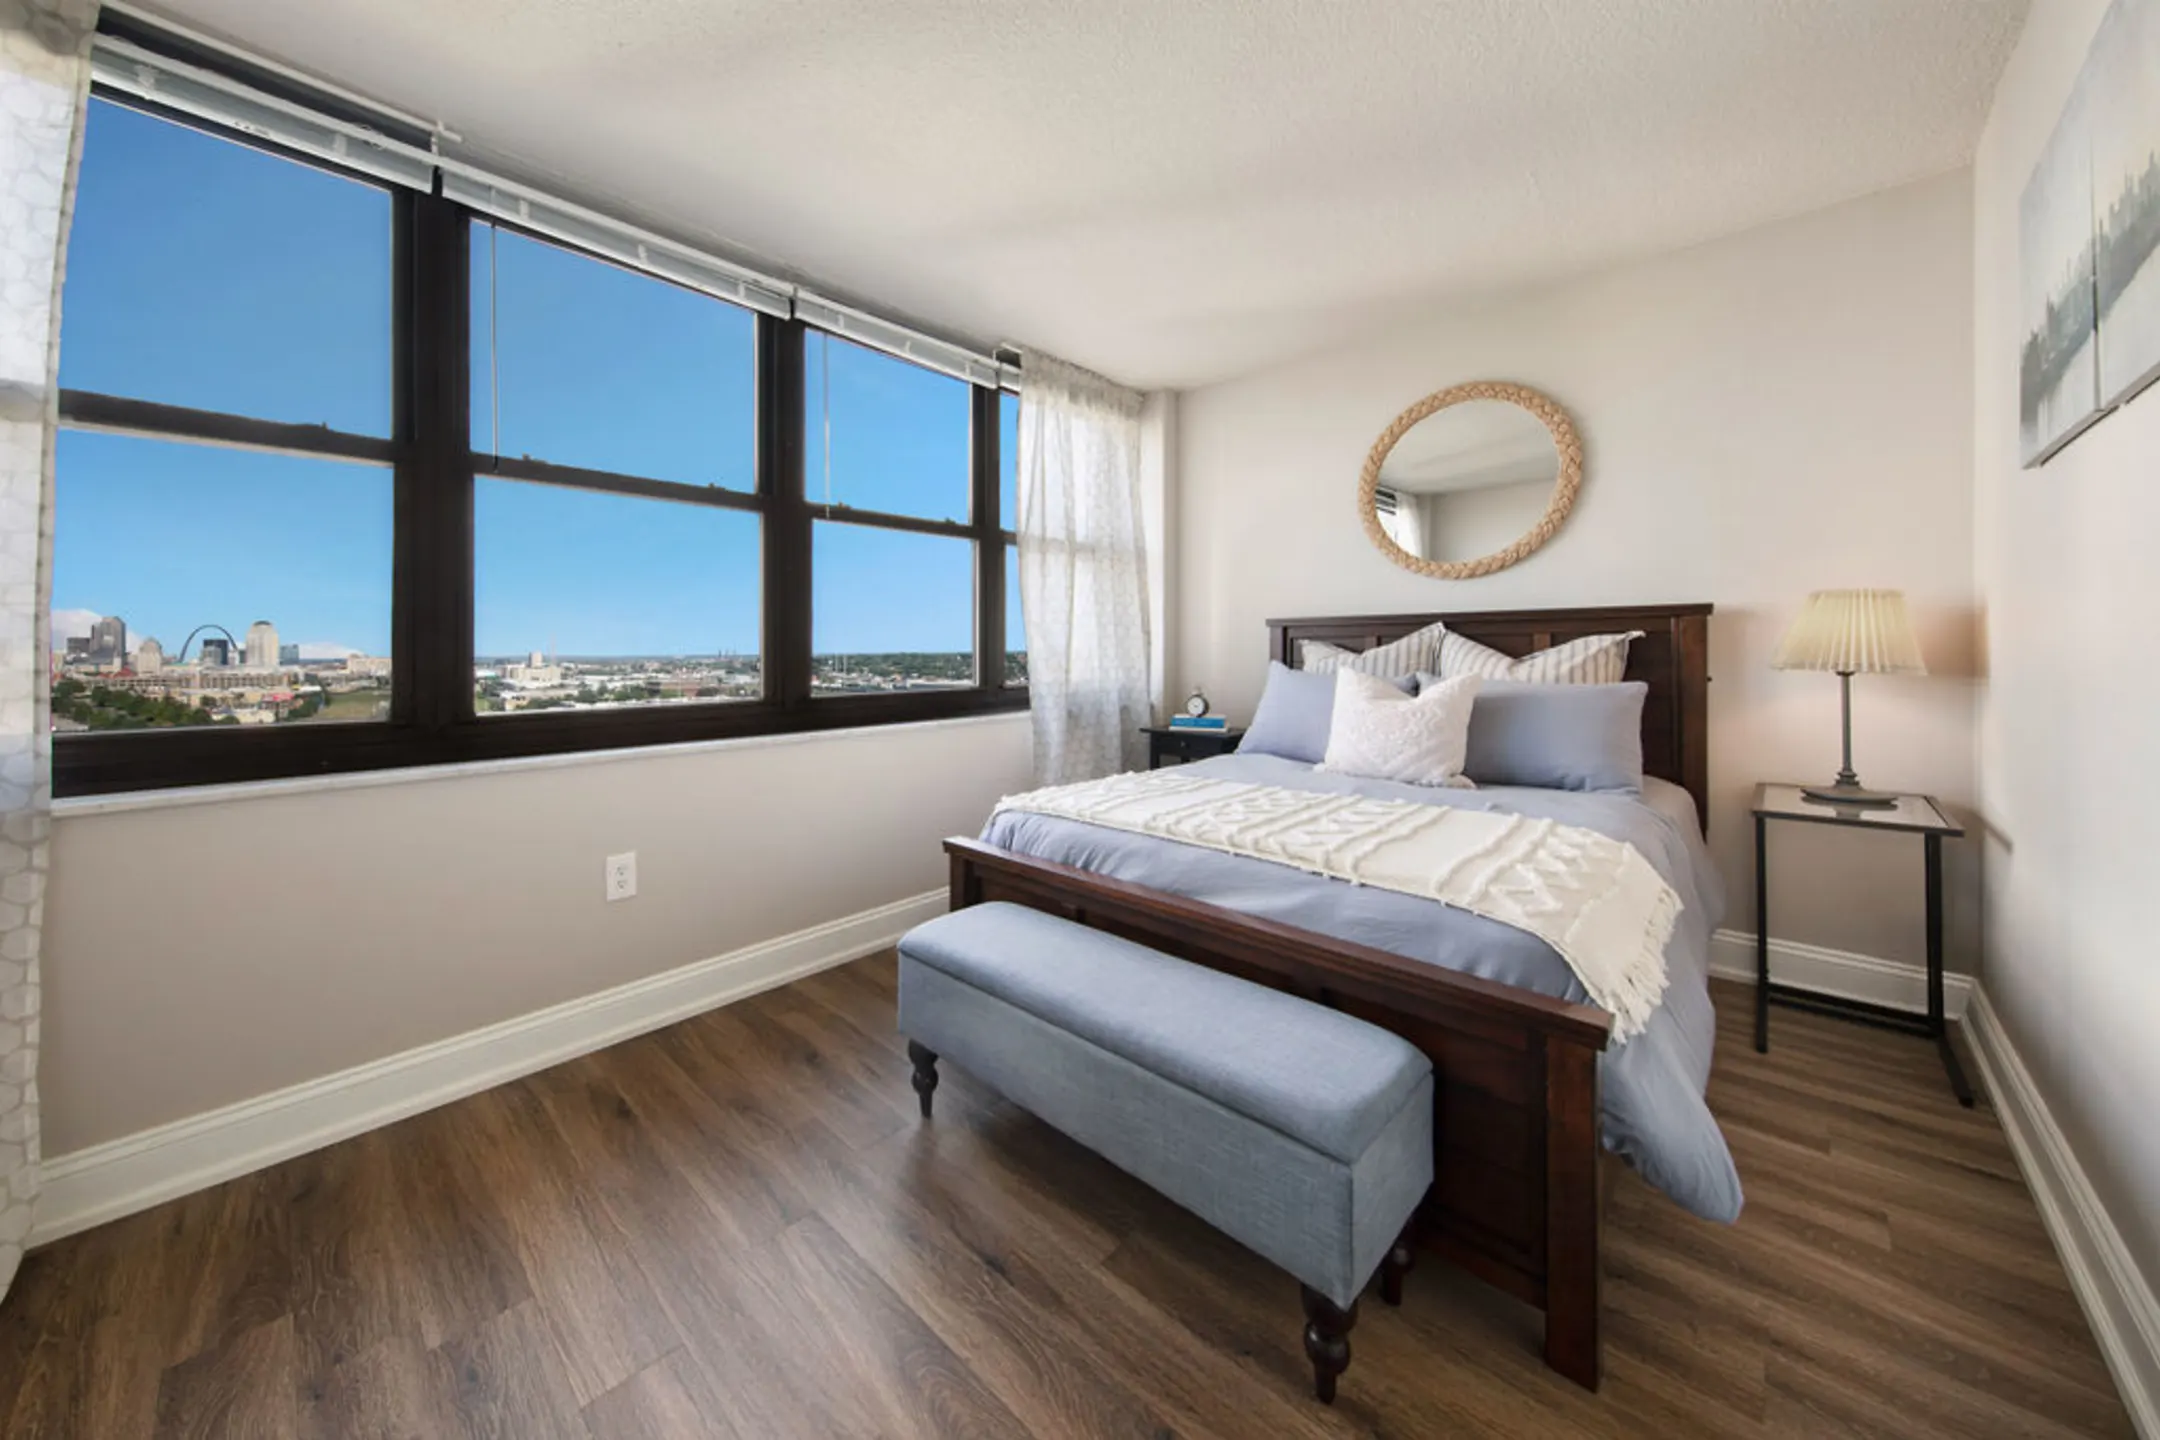 Bedroom - Midtown 300 - Saint Louis, MO